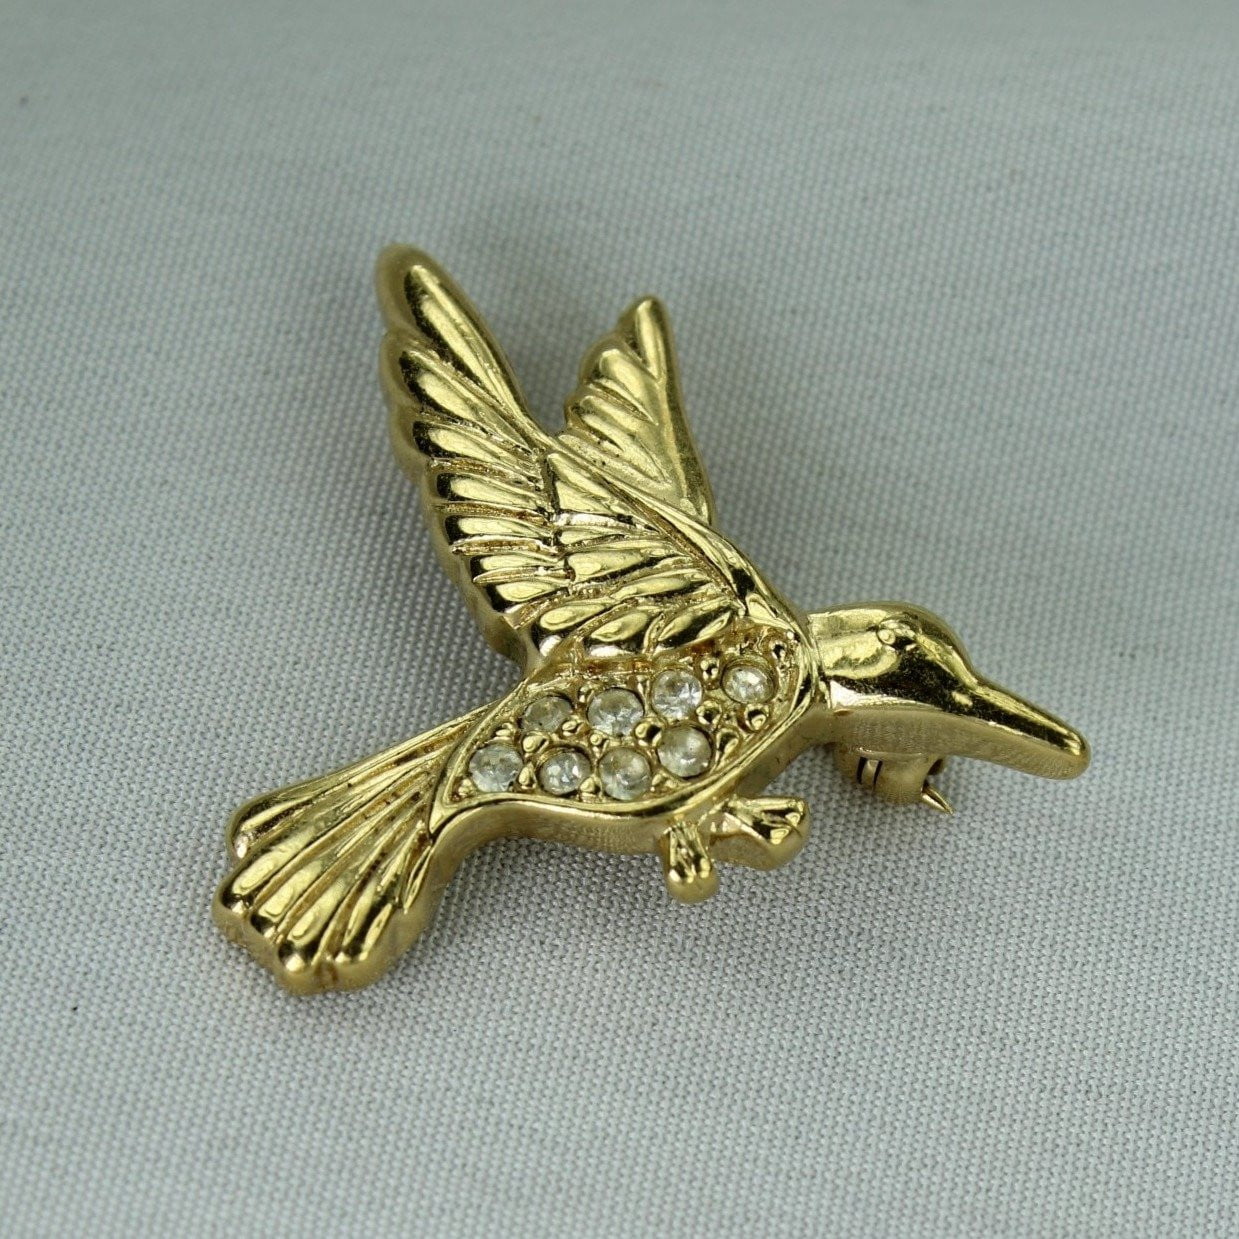 Vintage TRIFARI Pin Tiny Gold Tone Rhinestone Bird